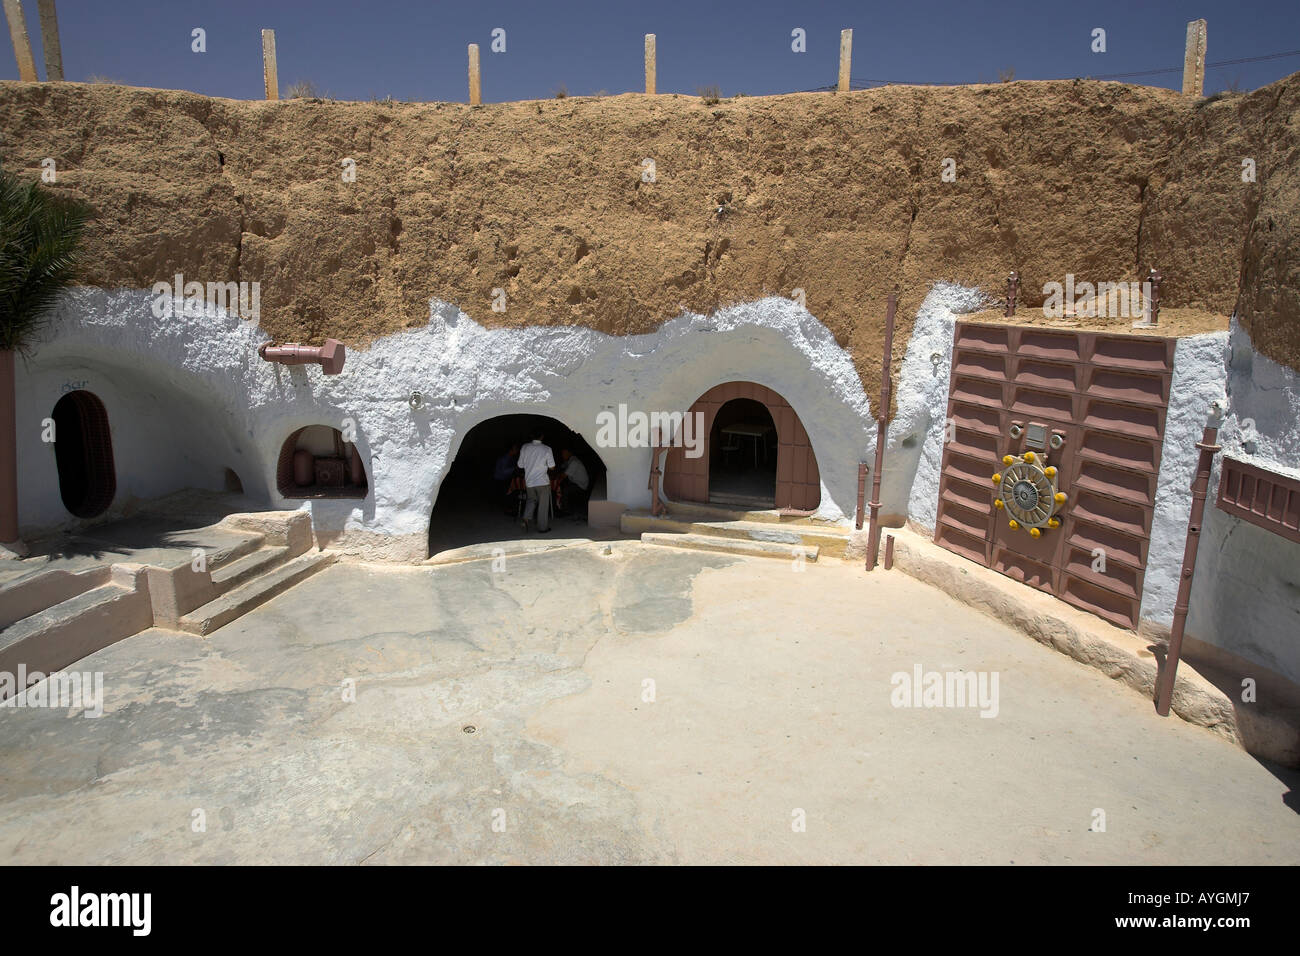 Star Wars movie film set door still featured at the underground Hotel Sidi Driss Matmata Tunisia Stock Photo